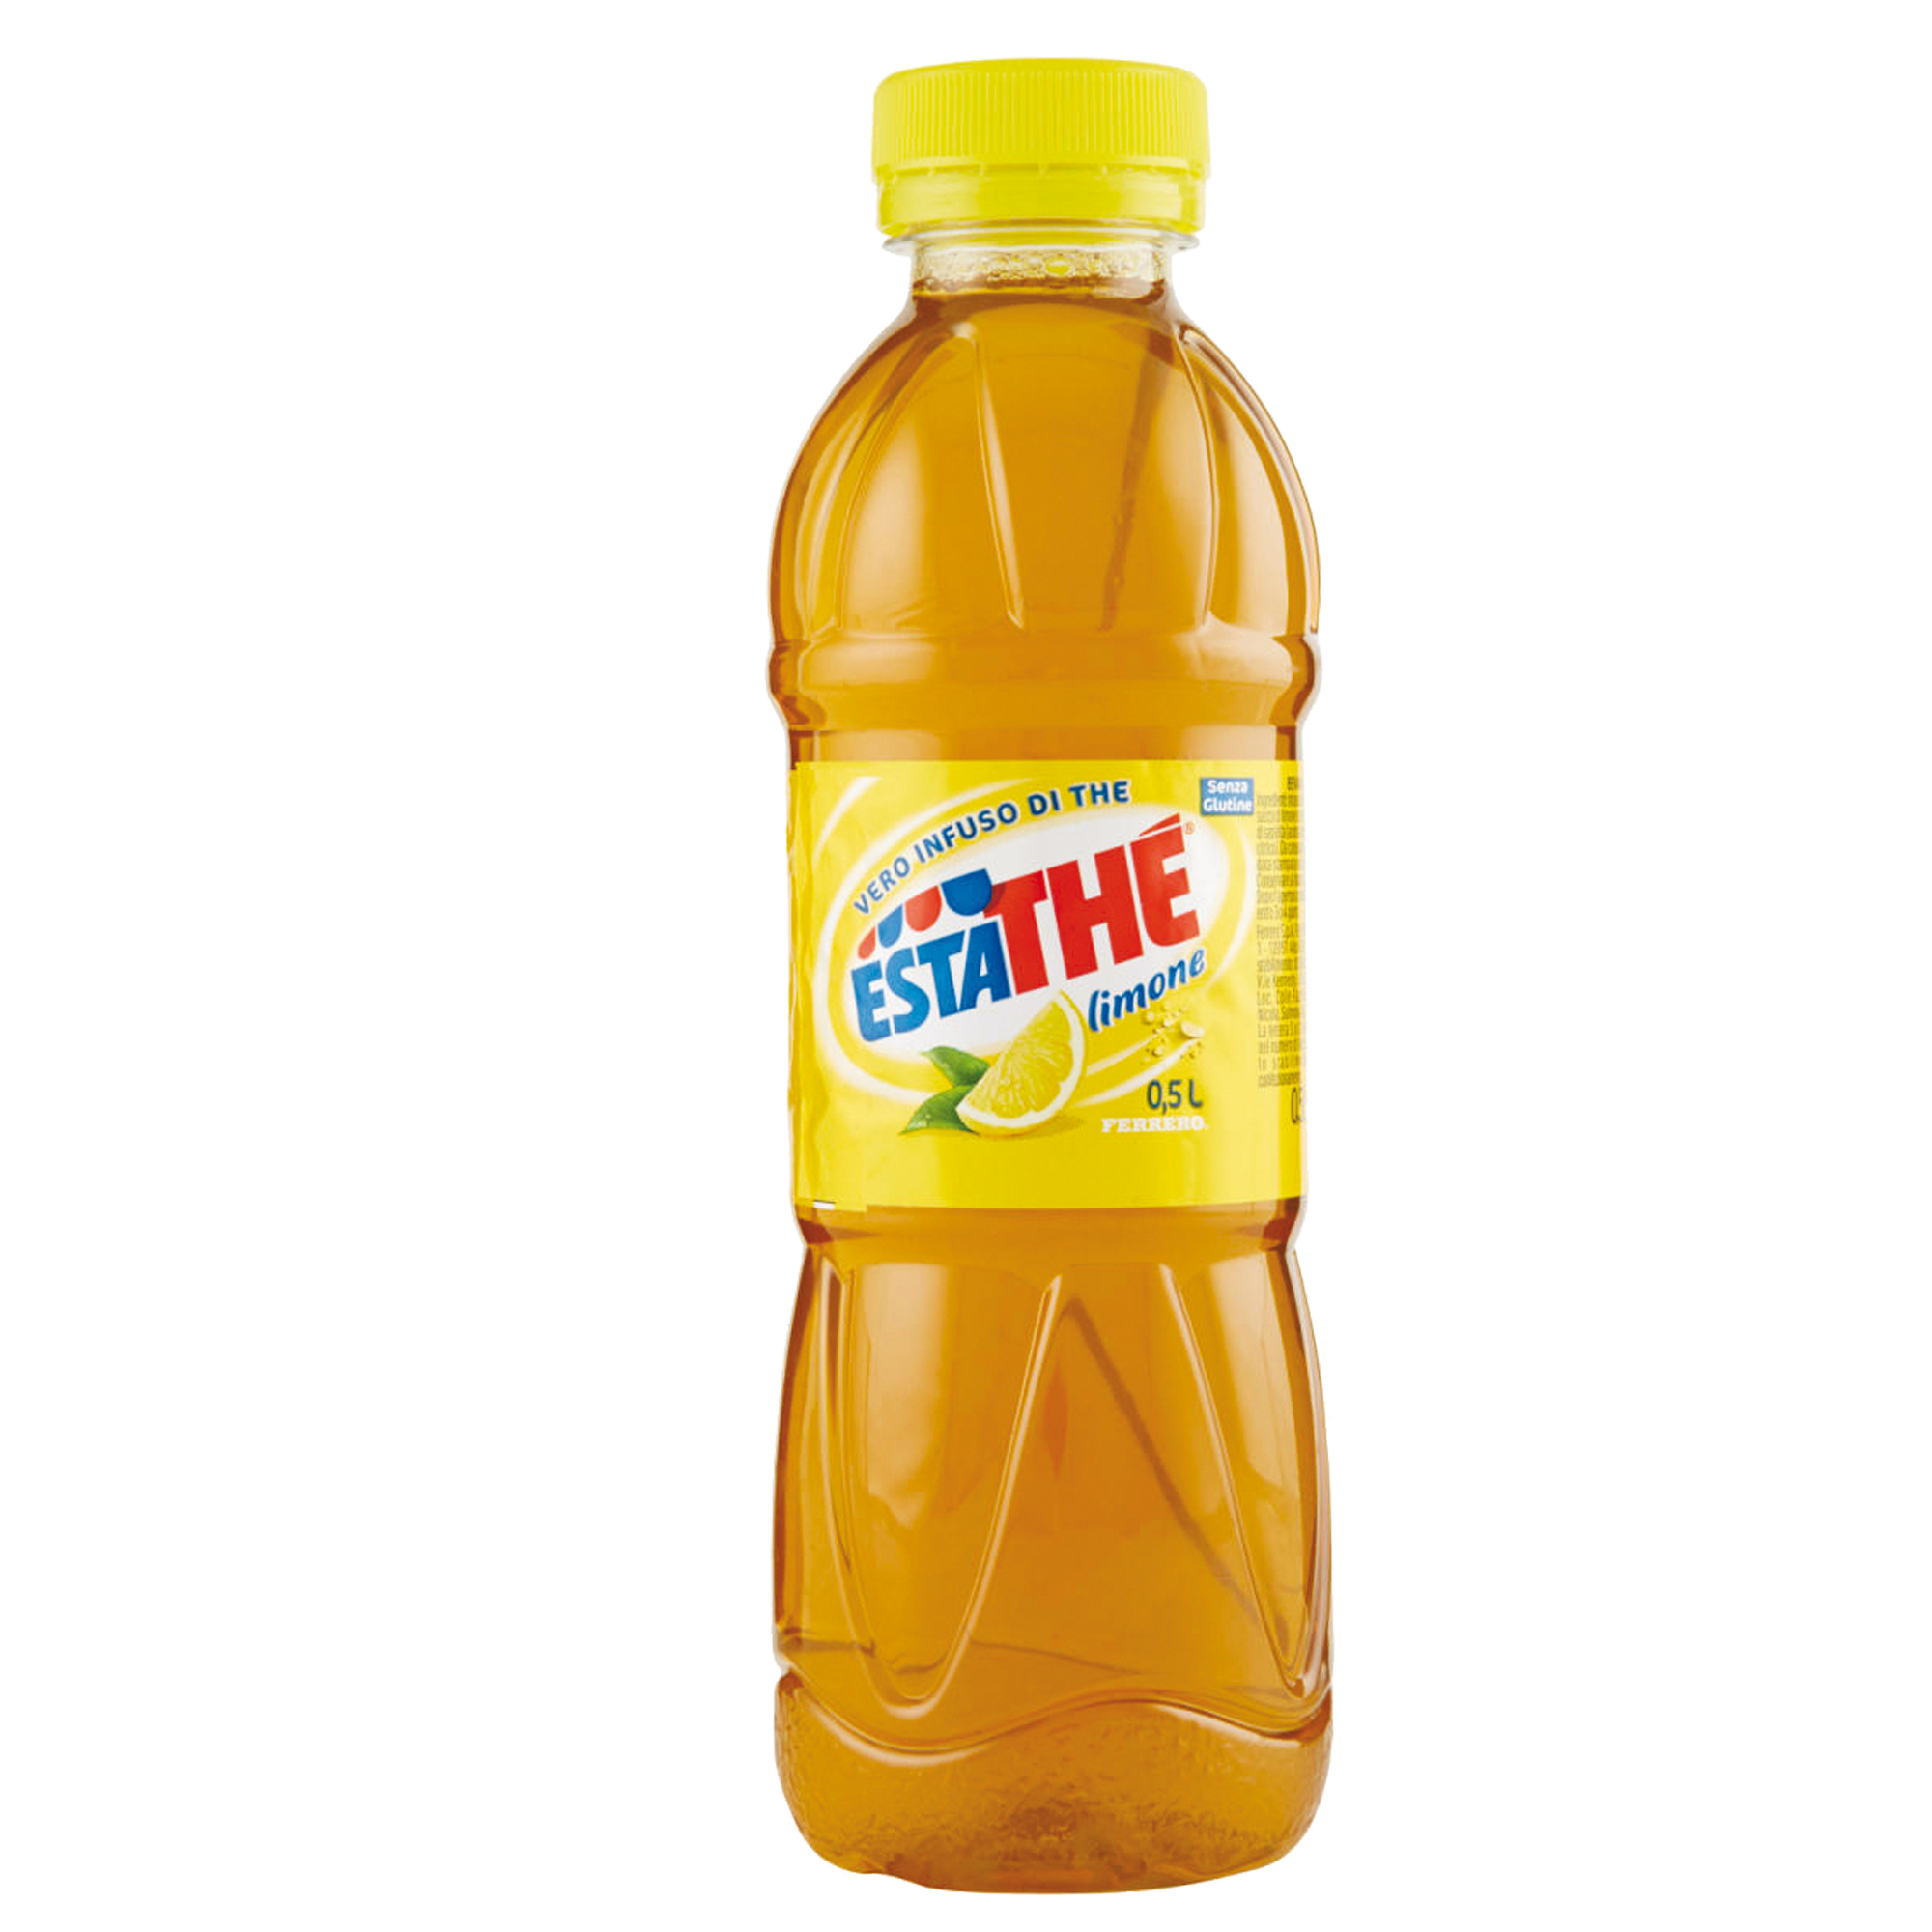 EstathE' al limone - PET - bottiglia da 400ml